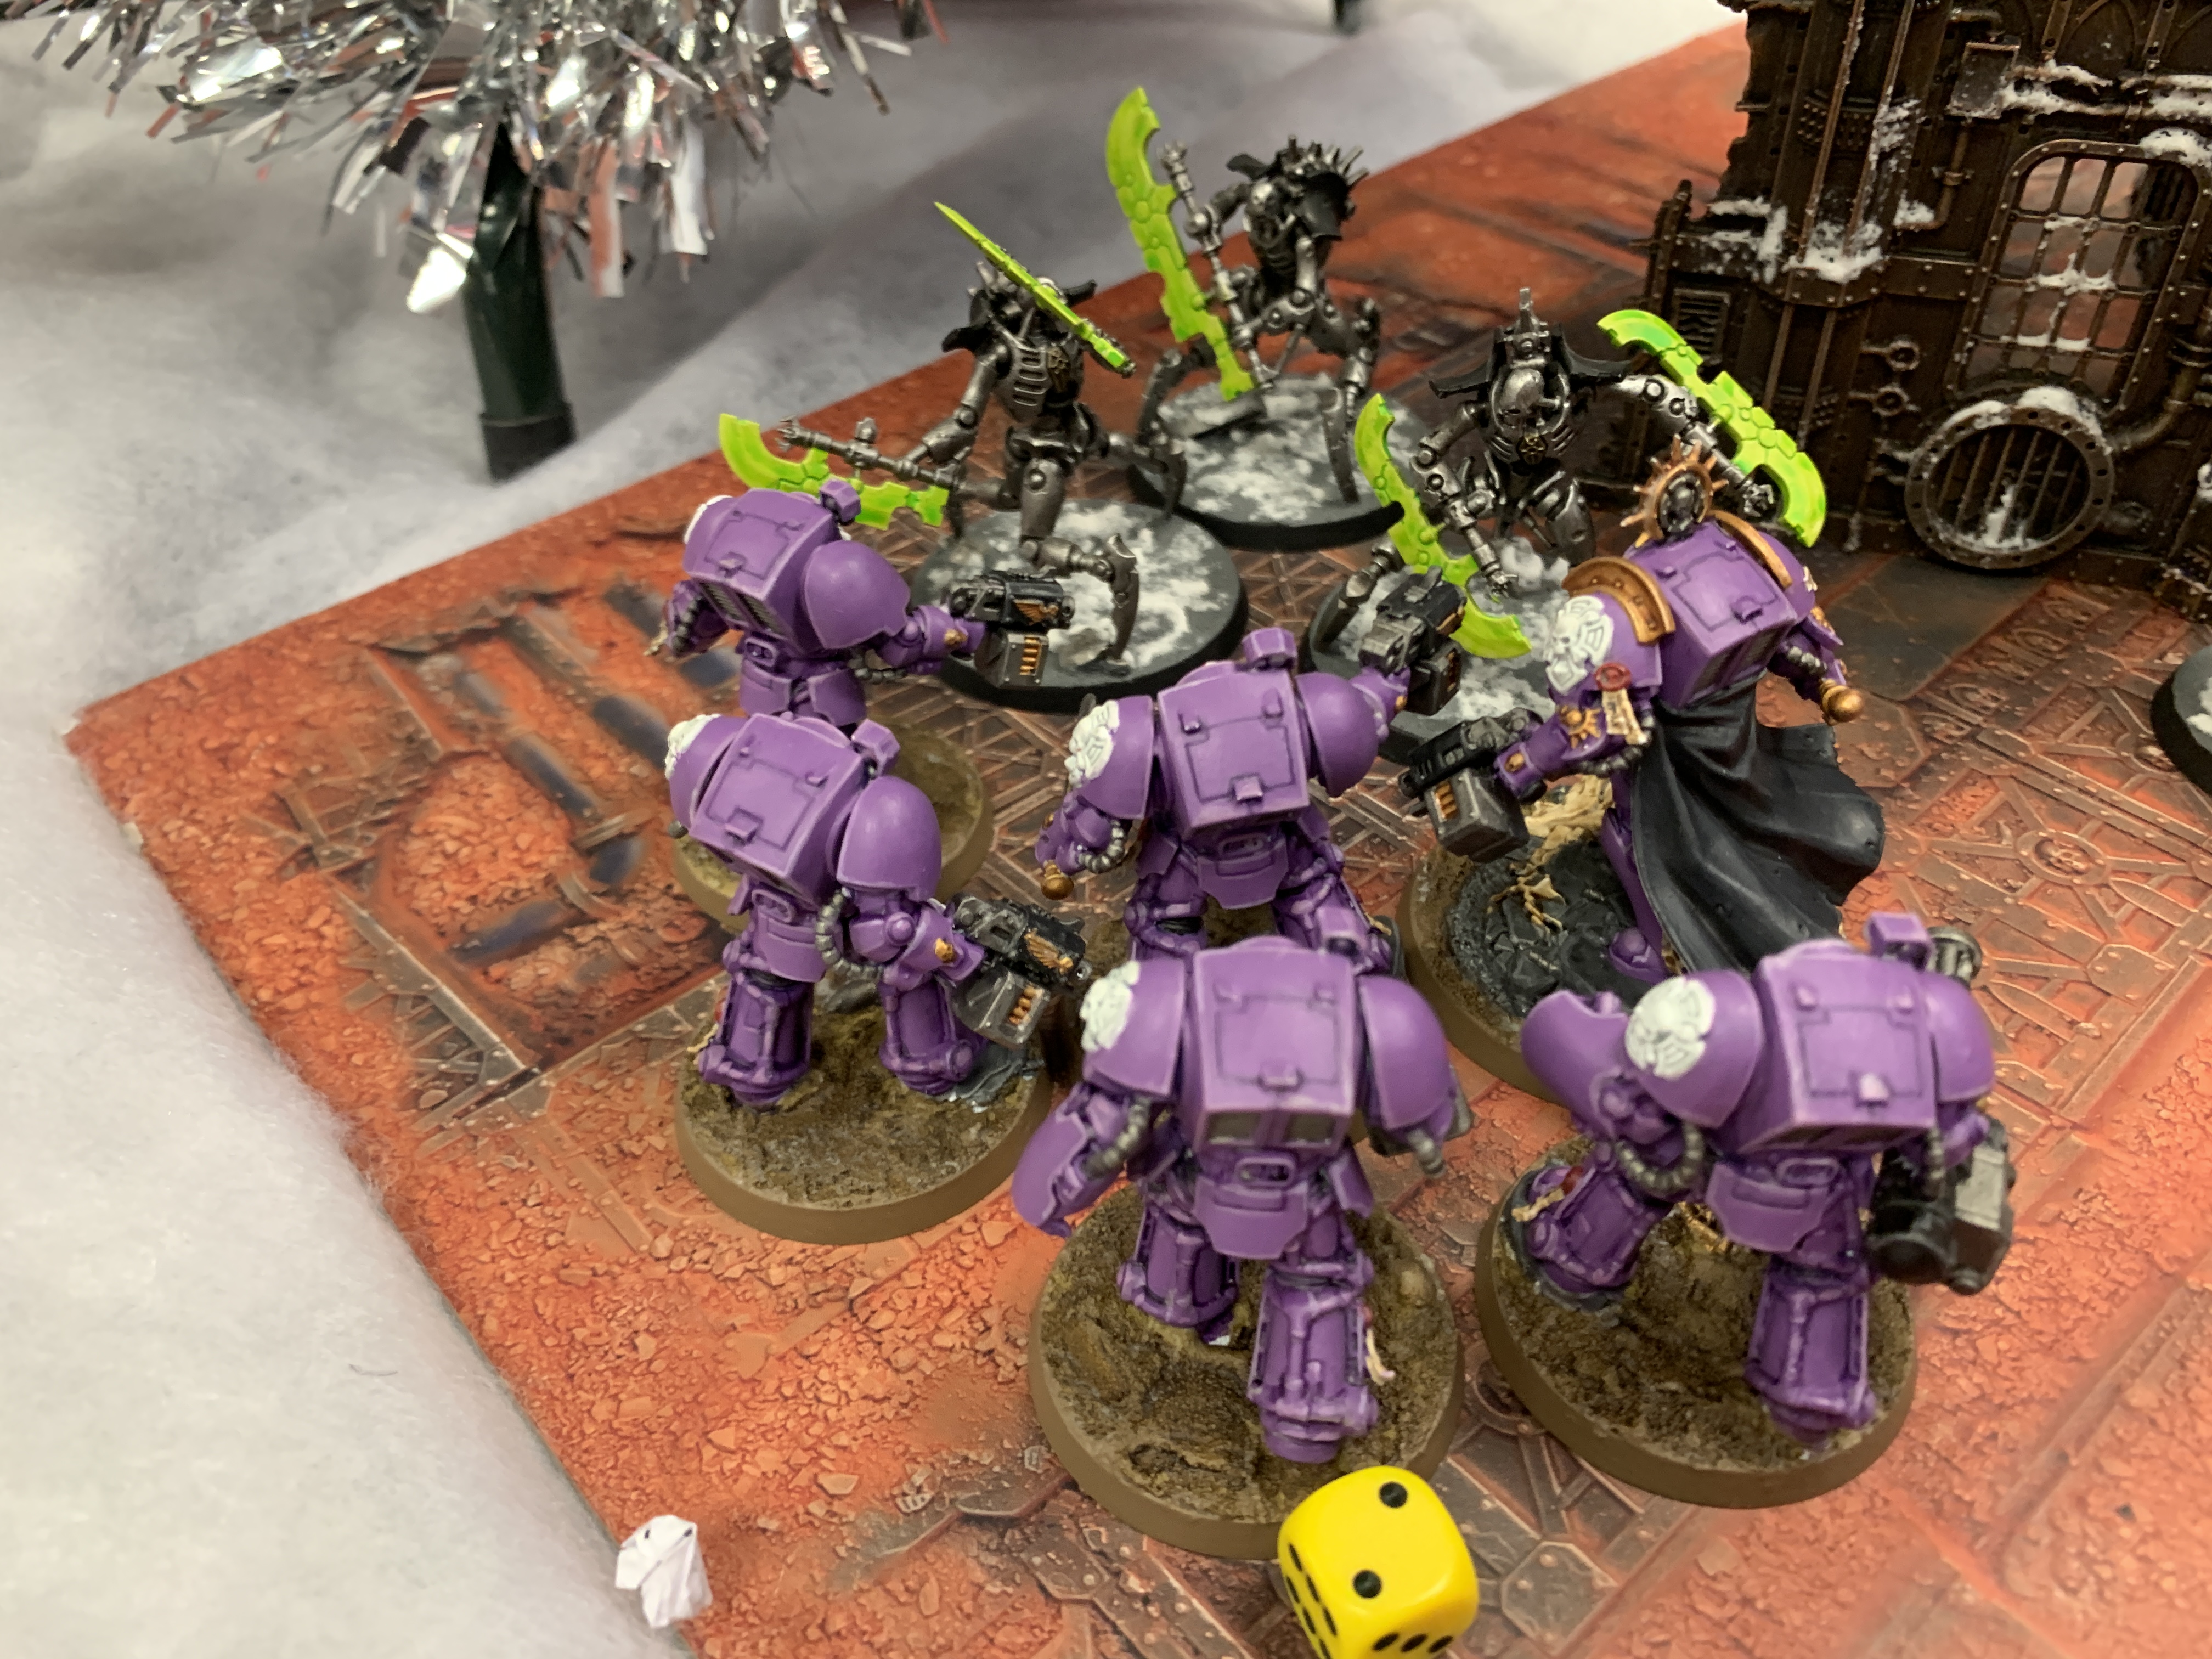 Six purple Space Marines in Terminator Armour facing three Necron Skorpekh Destroyers wielding light green blades